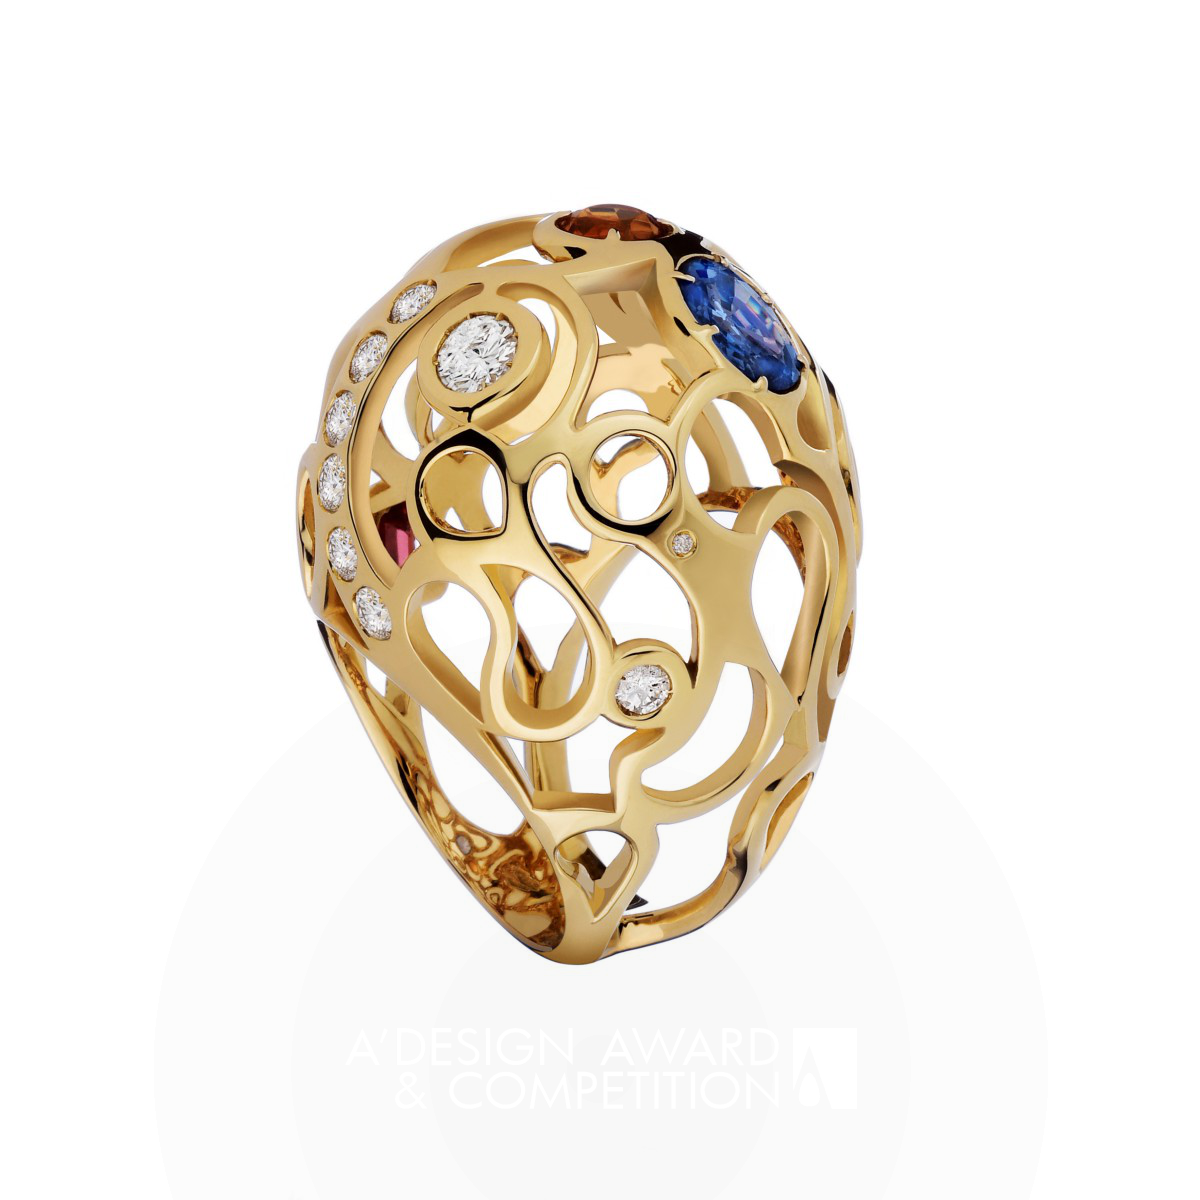 Eleonora Federici wins Iron at the prestigious A' Jewelry Design Award with Kashmir Ring.